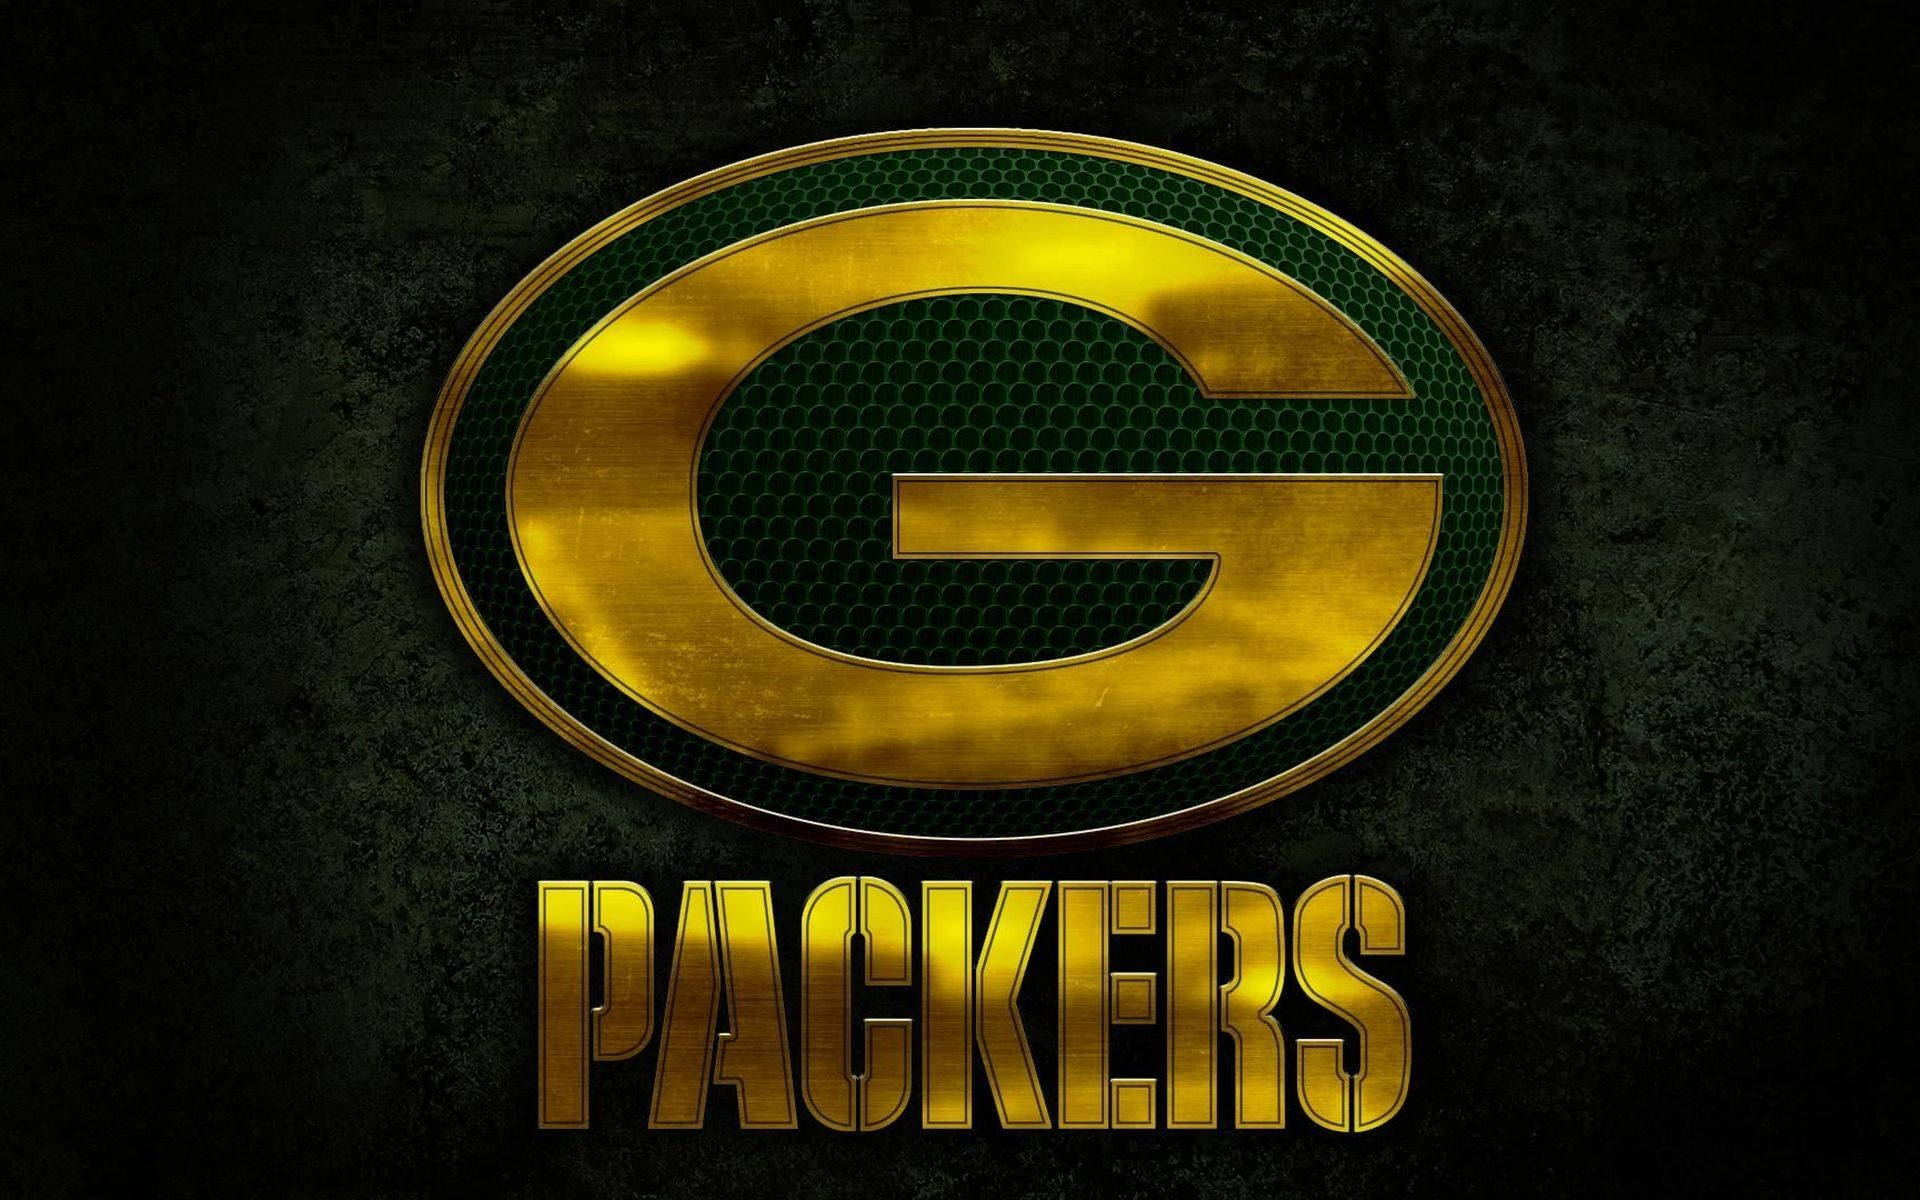 Green Bay Packers Golden Logo Background